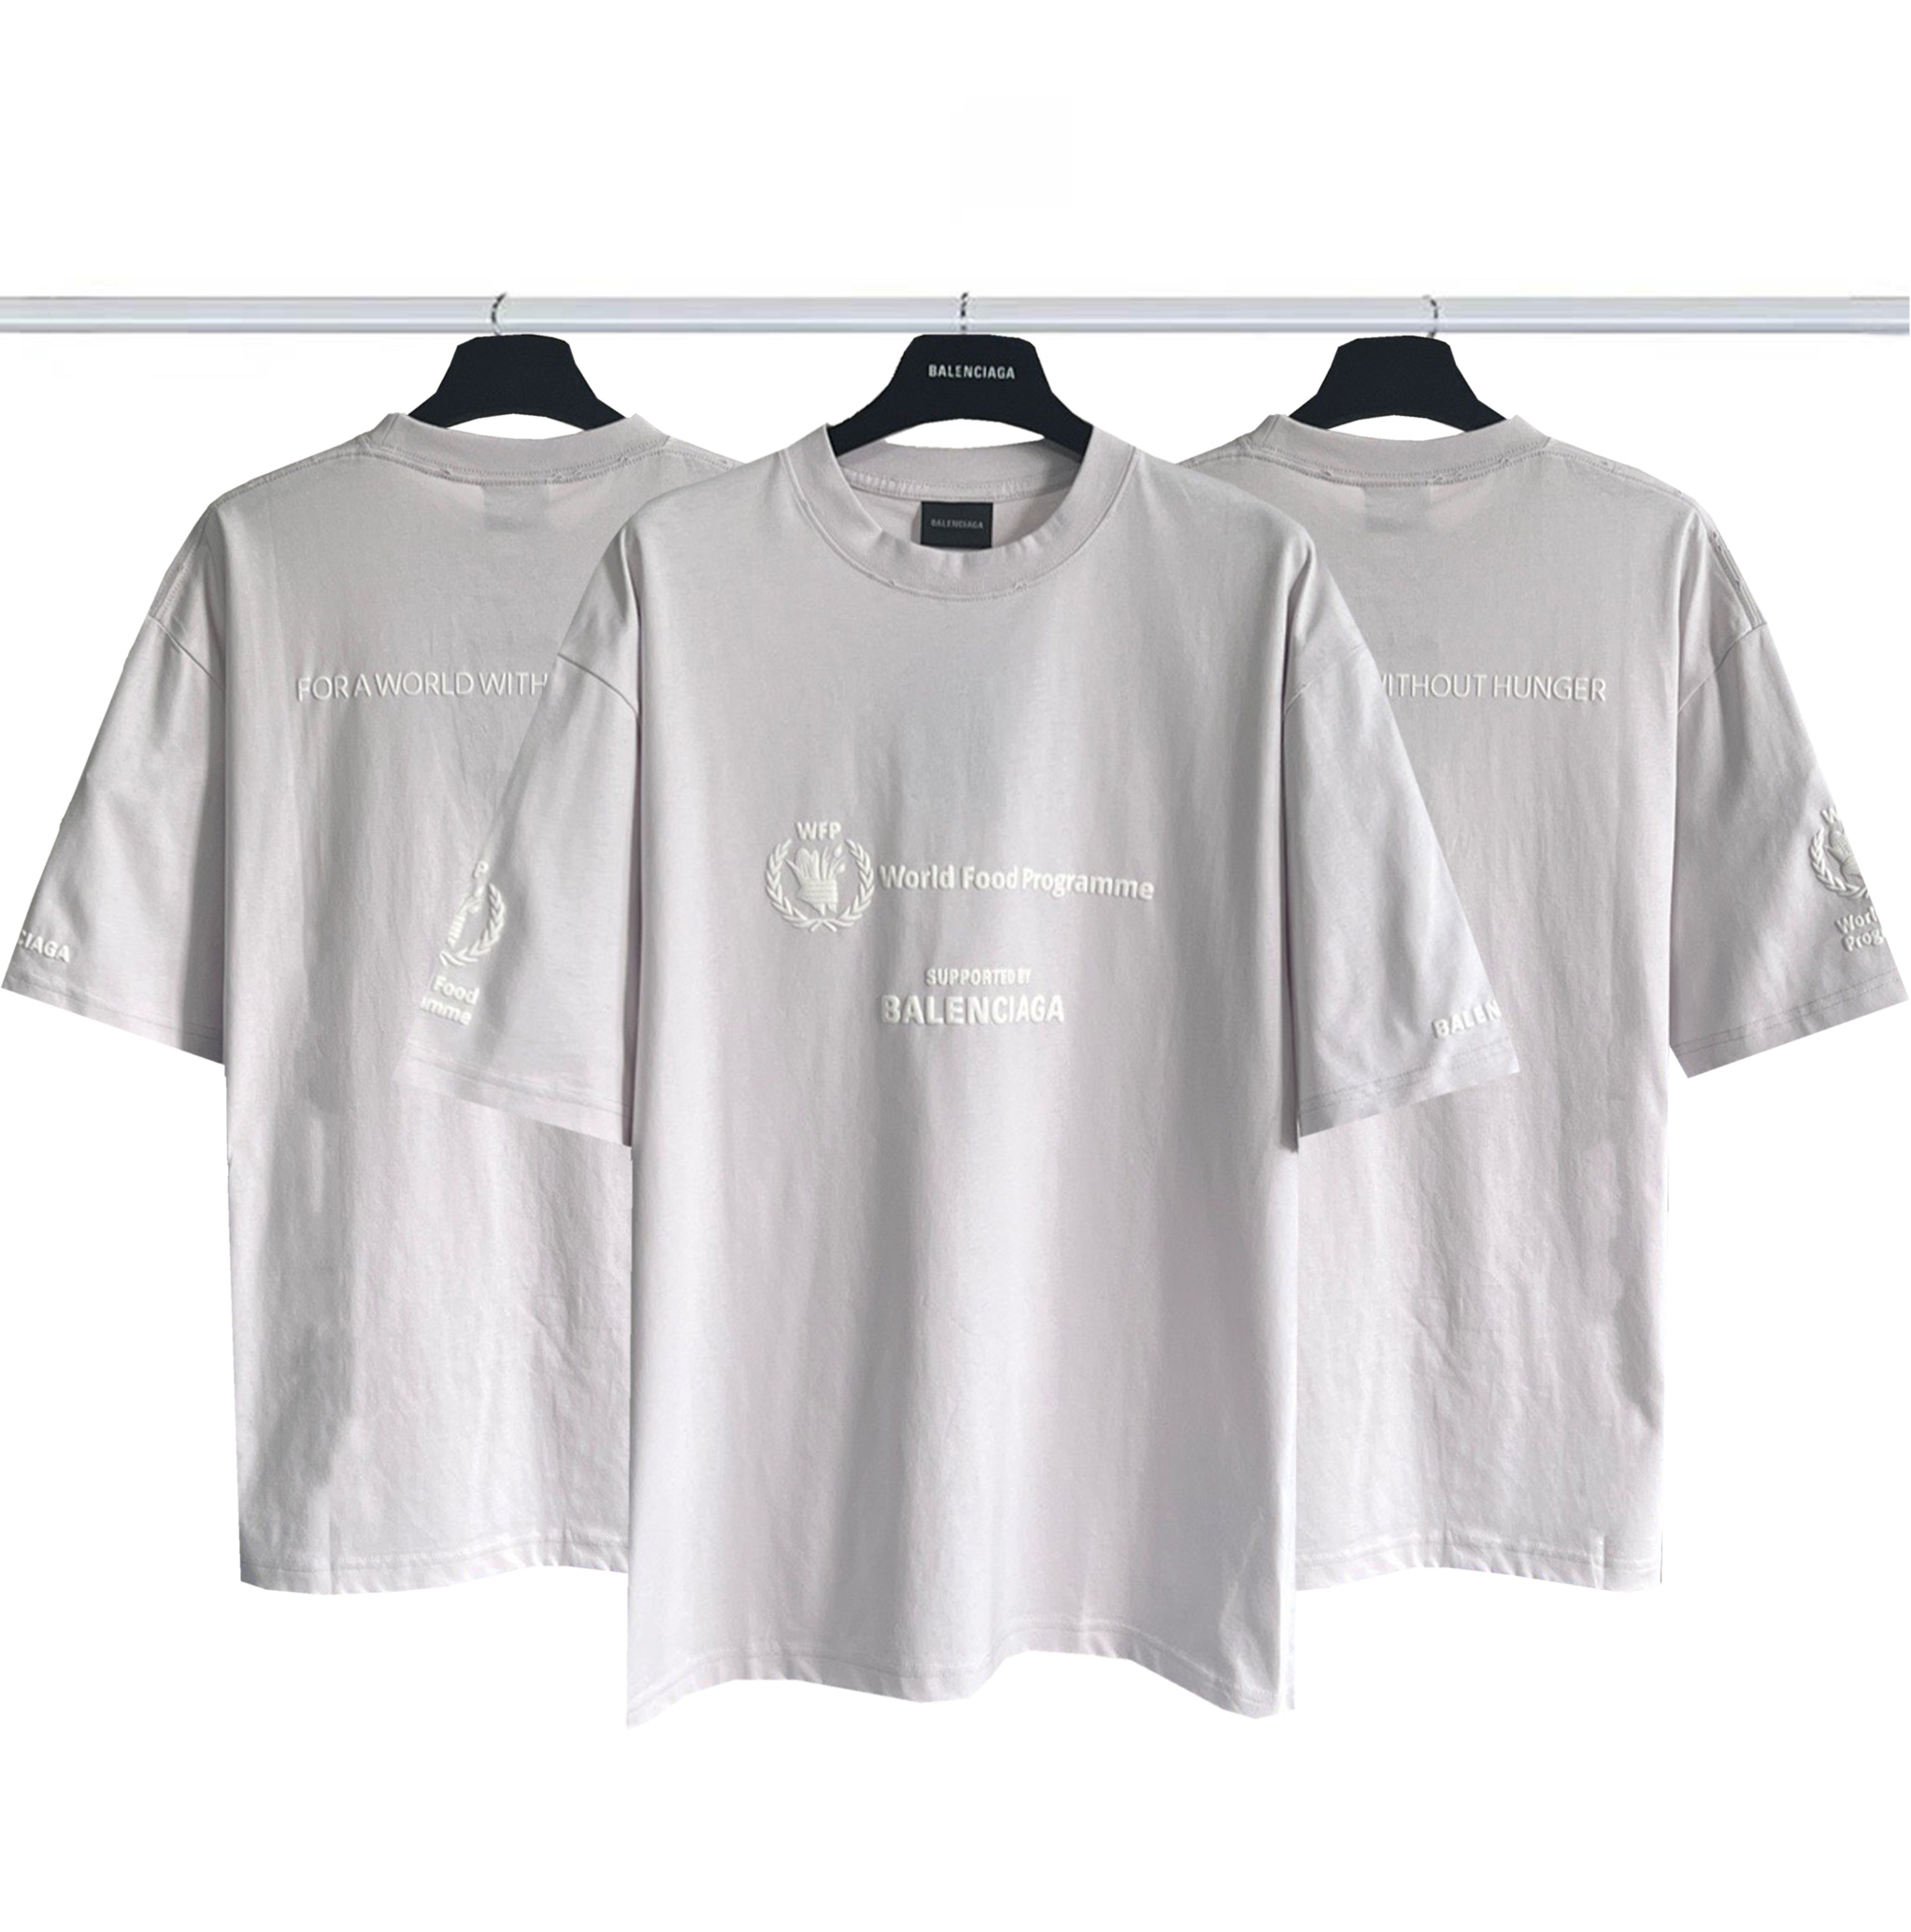 Balenciaga Clothing T-Shirt Apricot Color White Printing Combed Cotton Short Sleeve